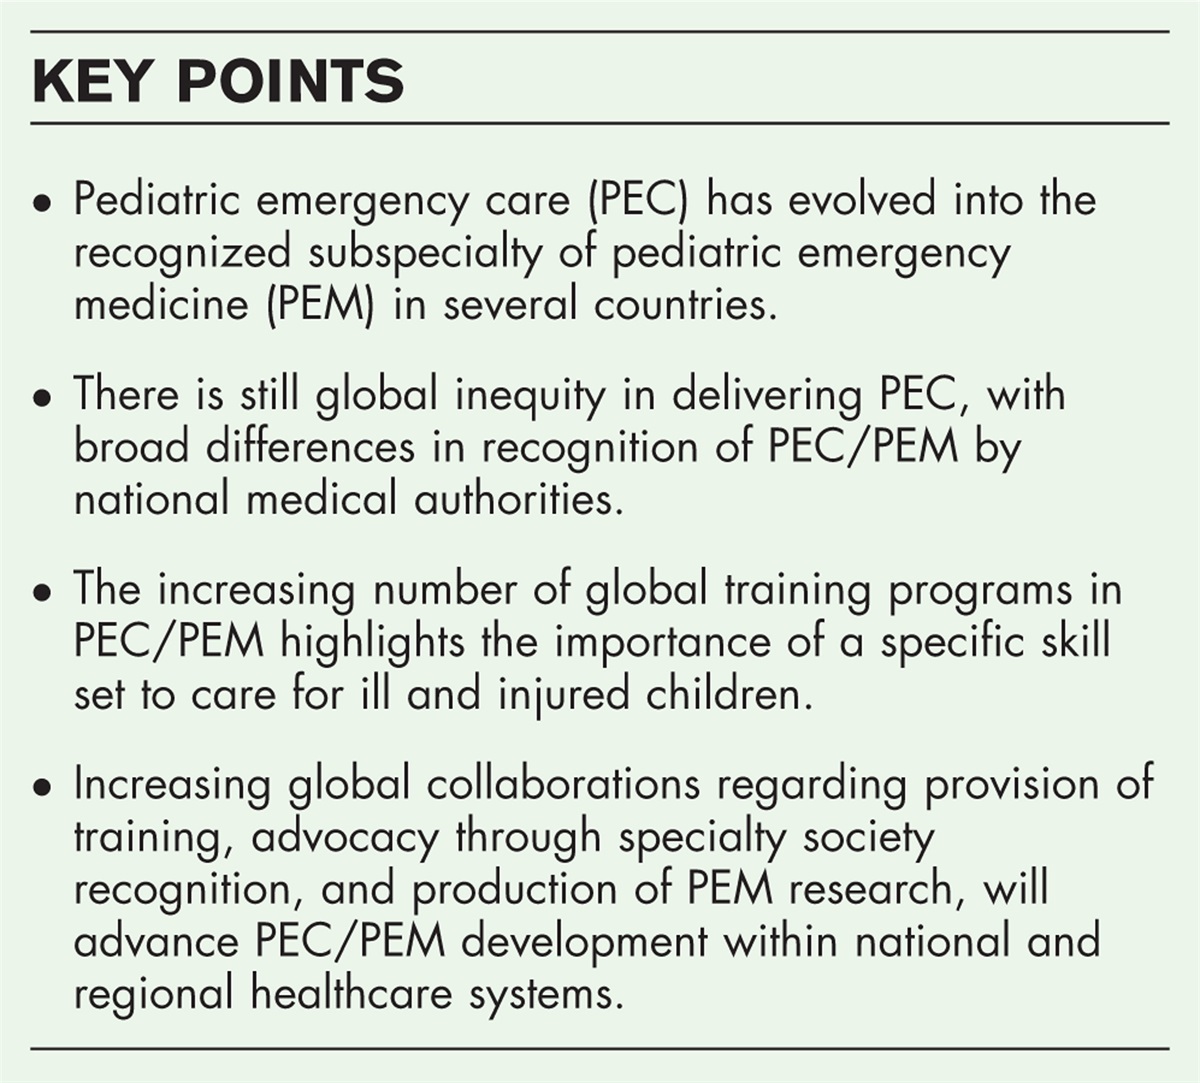 Current progress in international pediatric emergency medicine